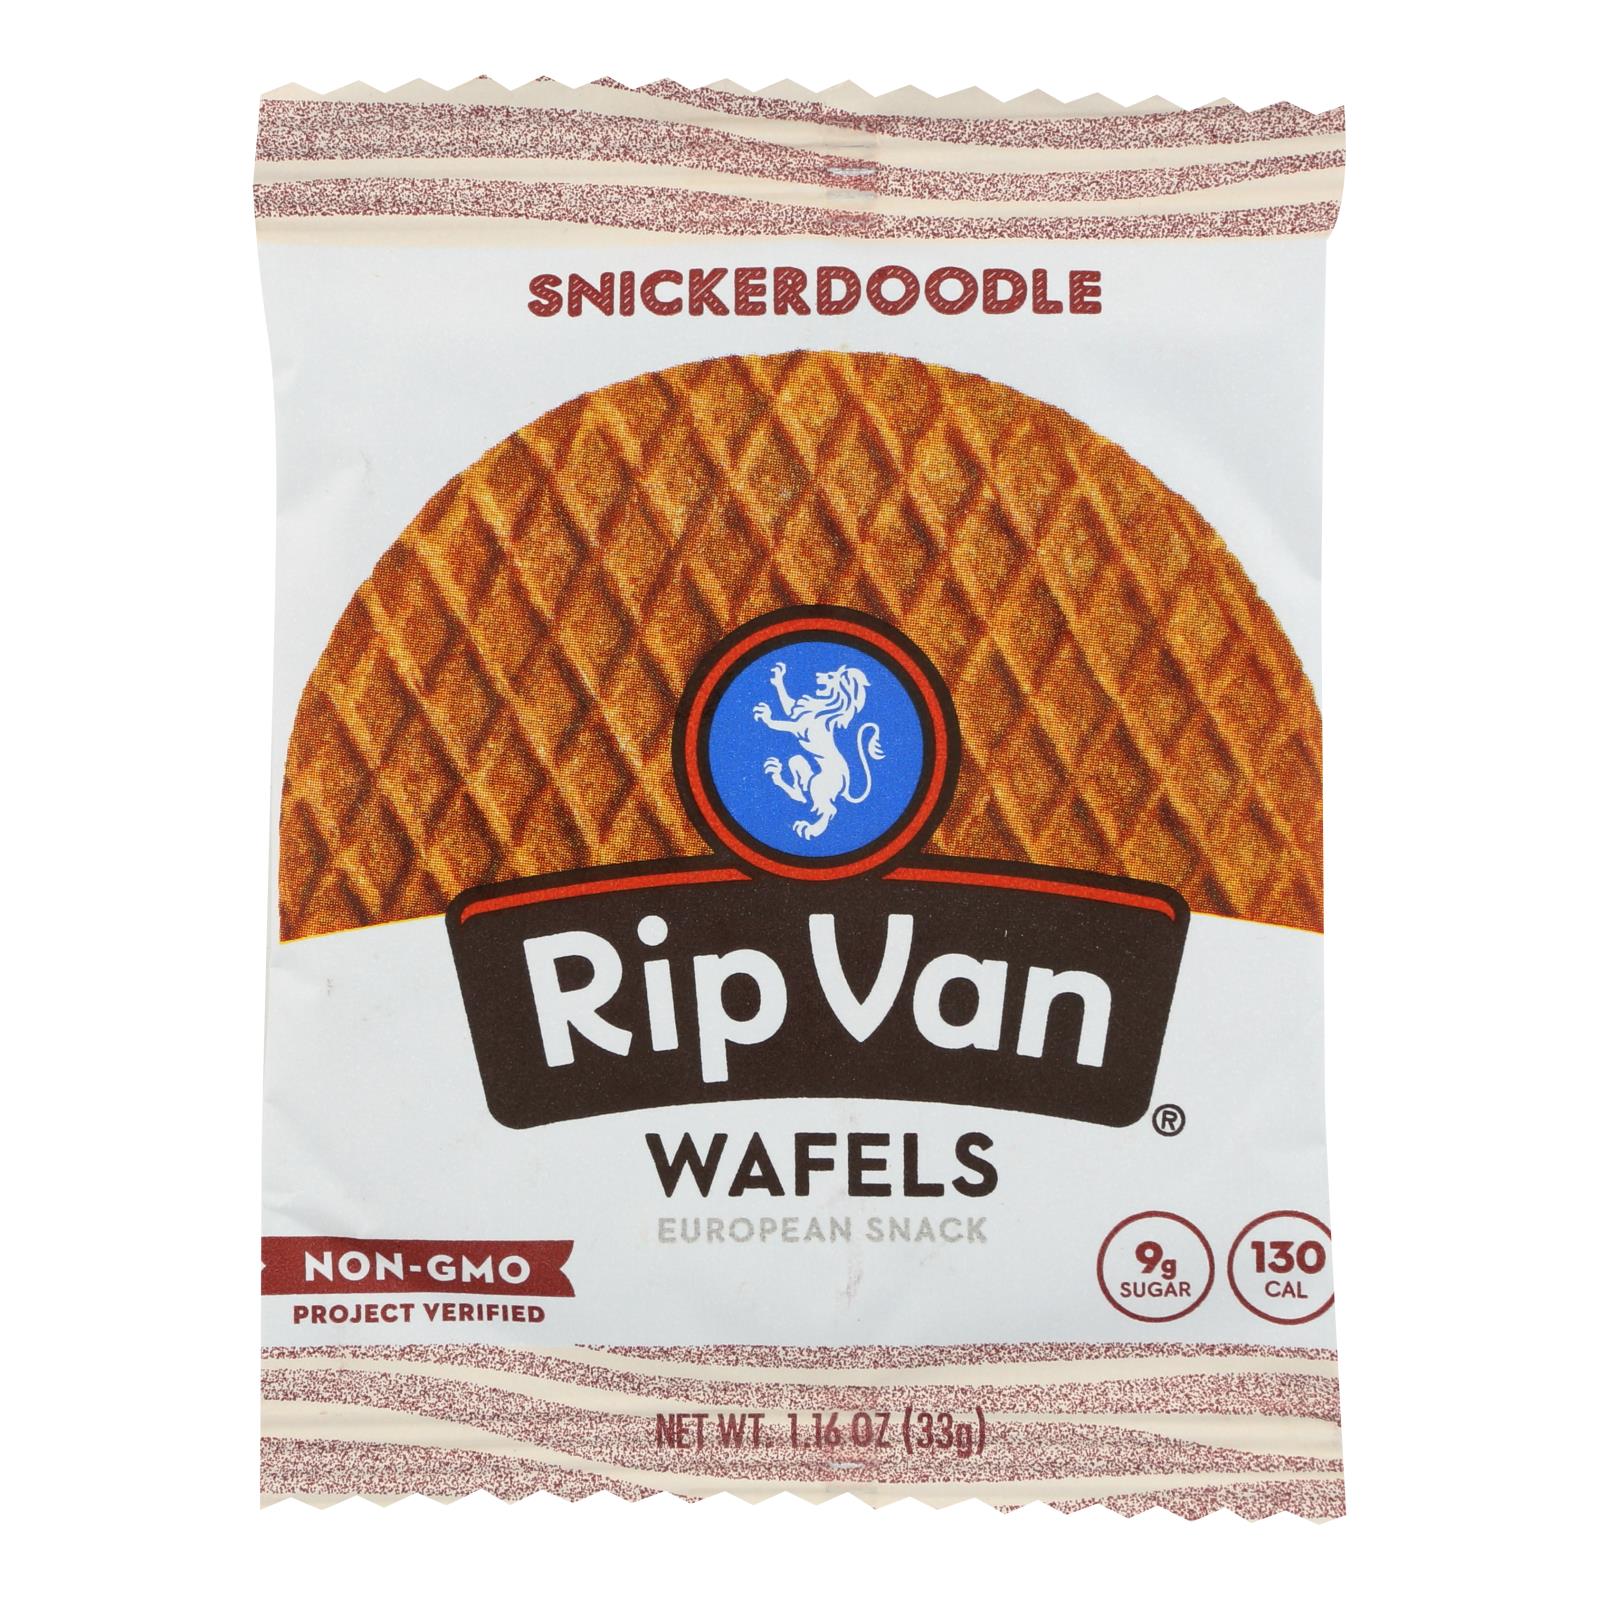 Rip Vanilla Wafels - Wafel Snickerdoodle Singl - 12개 묶음상품 - 1.16 OZ